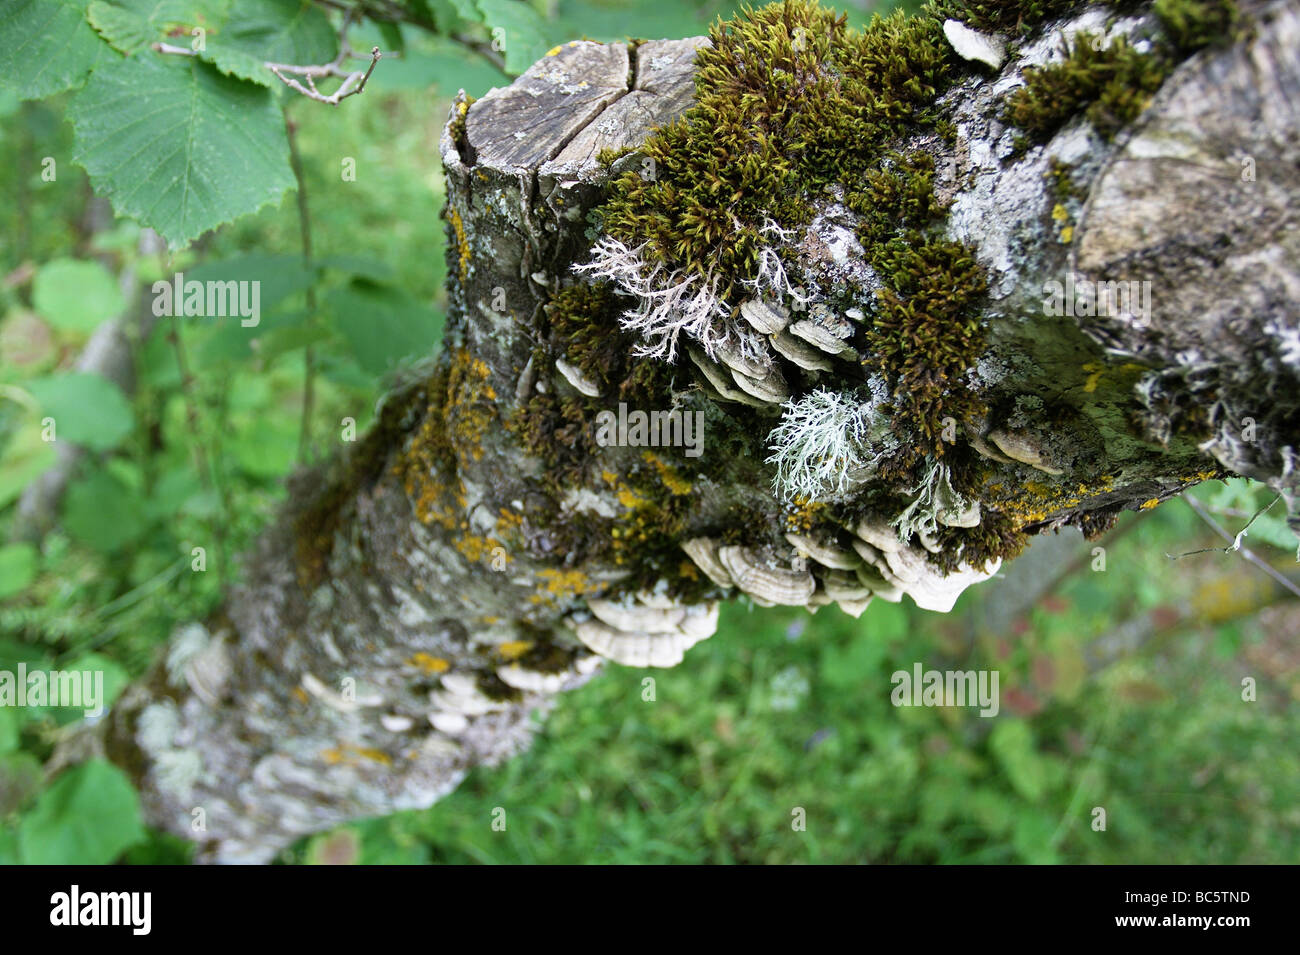 Mushrooms and mosses on tree Stock Photo